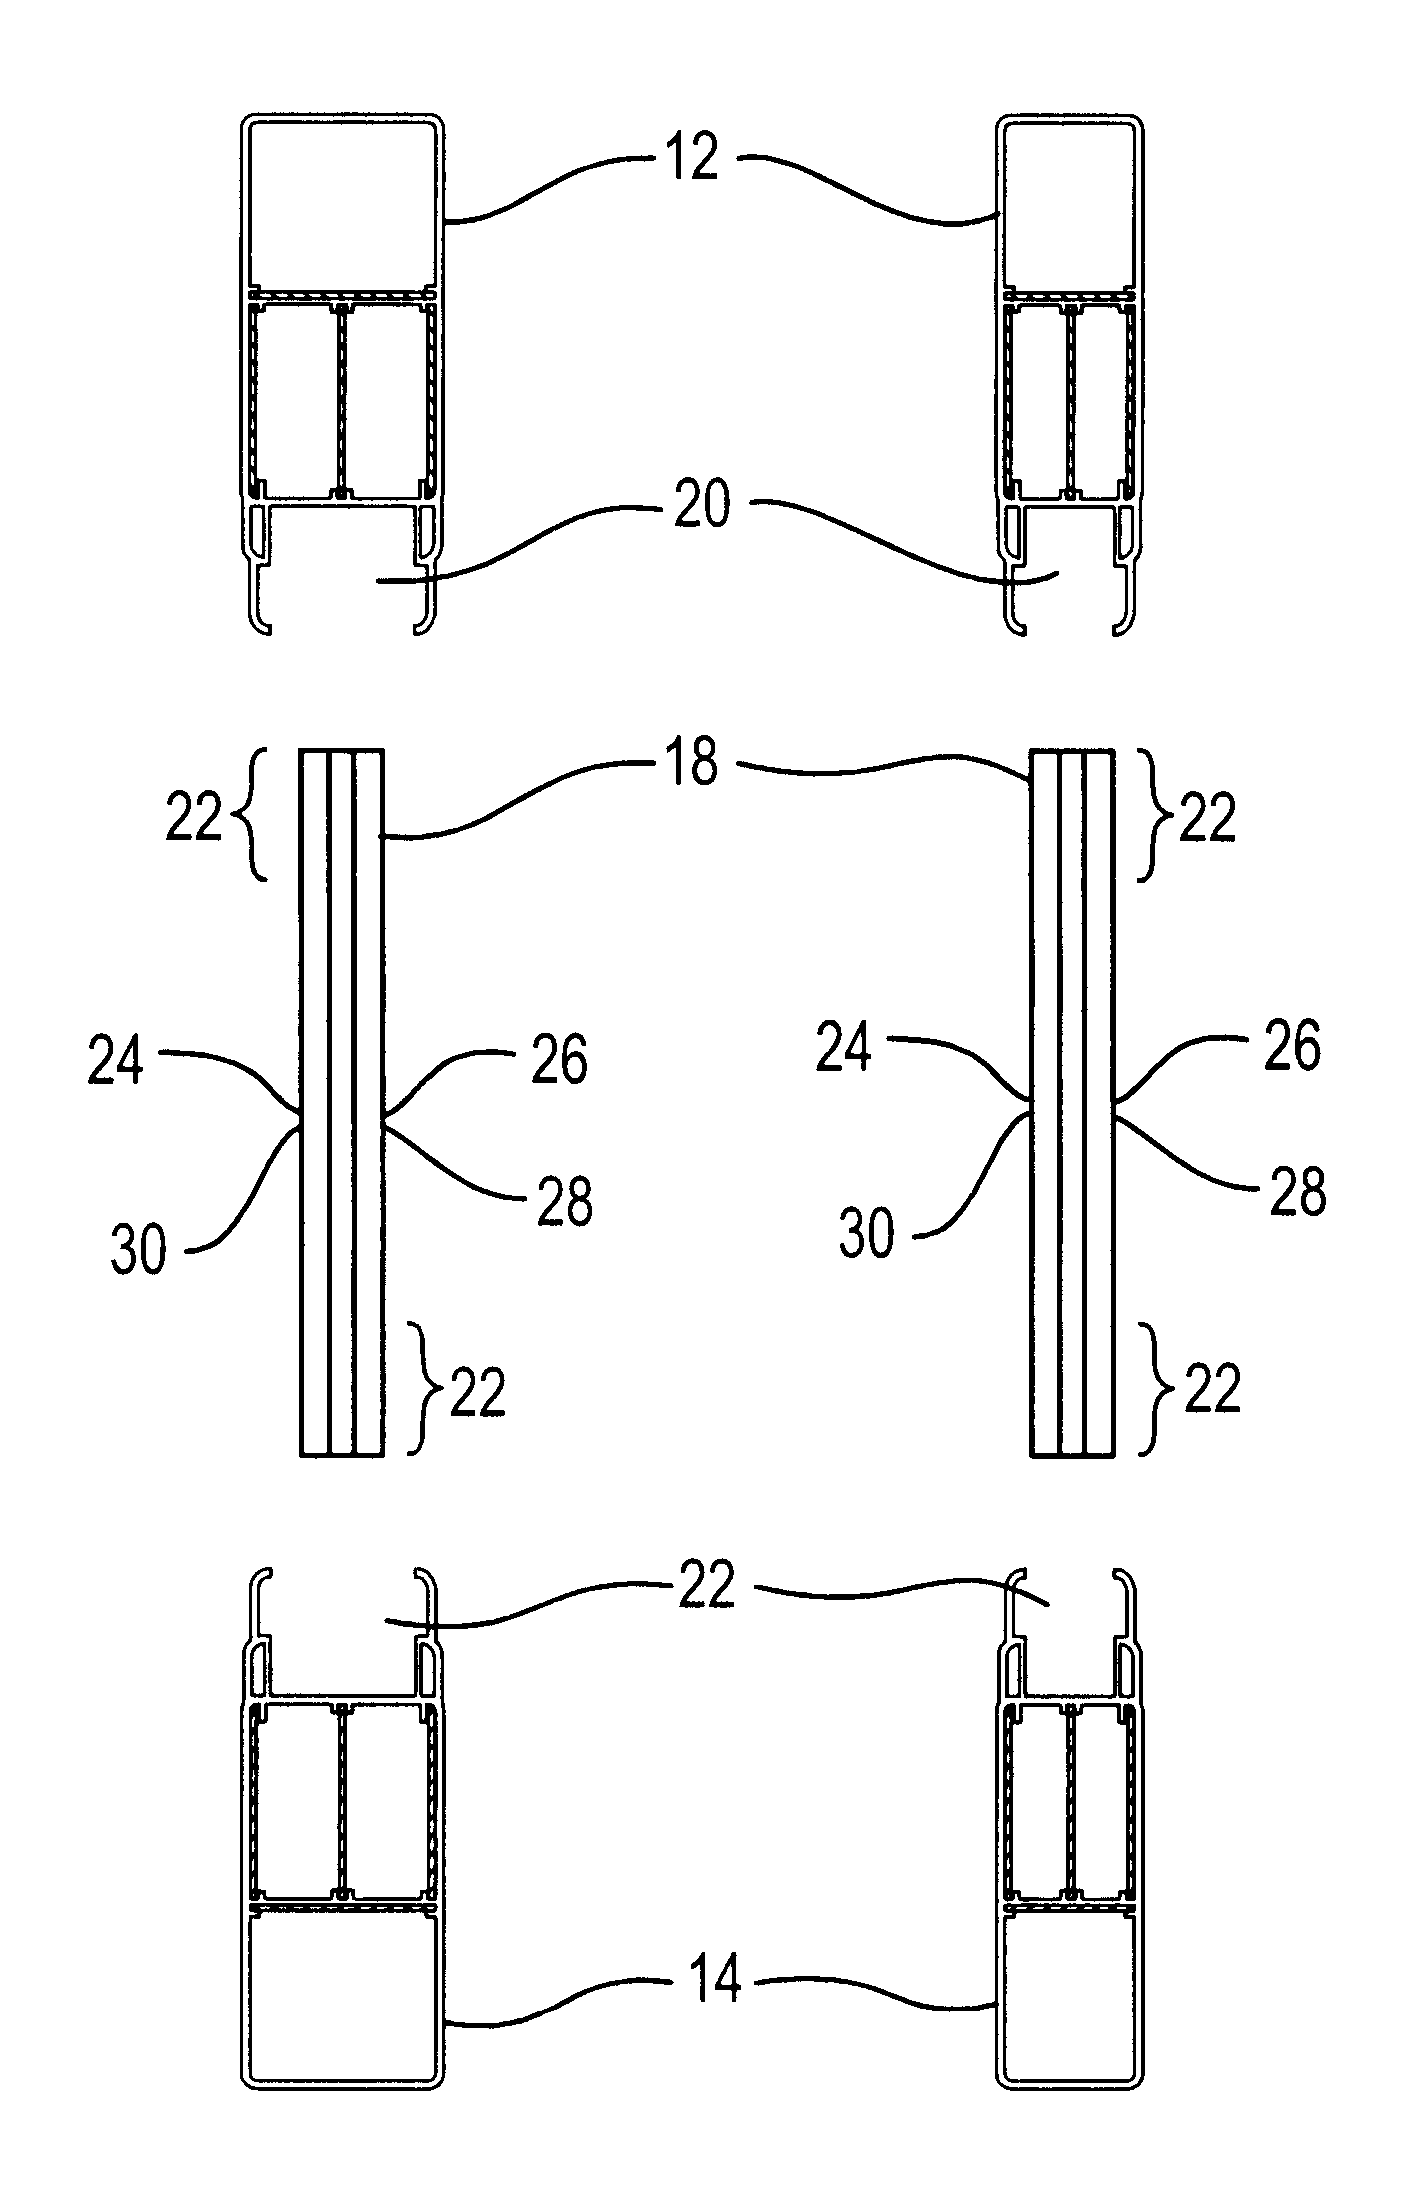 Vinyl beam reinforcement apparatus and method